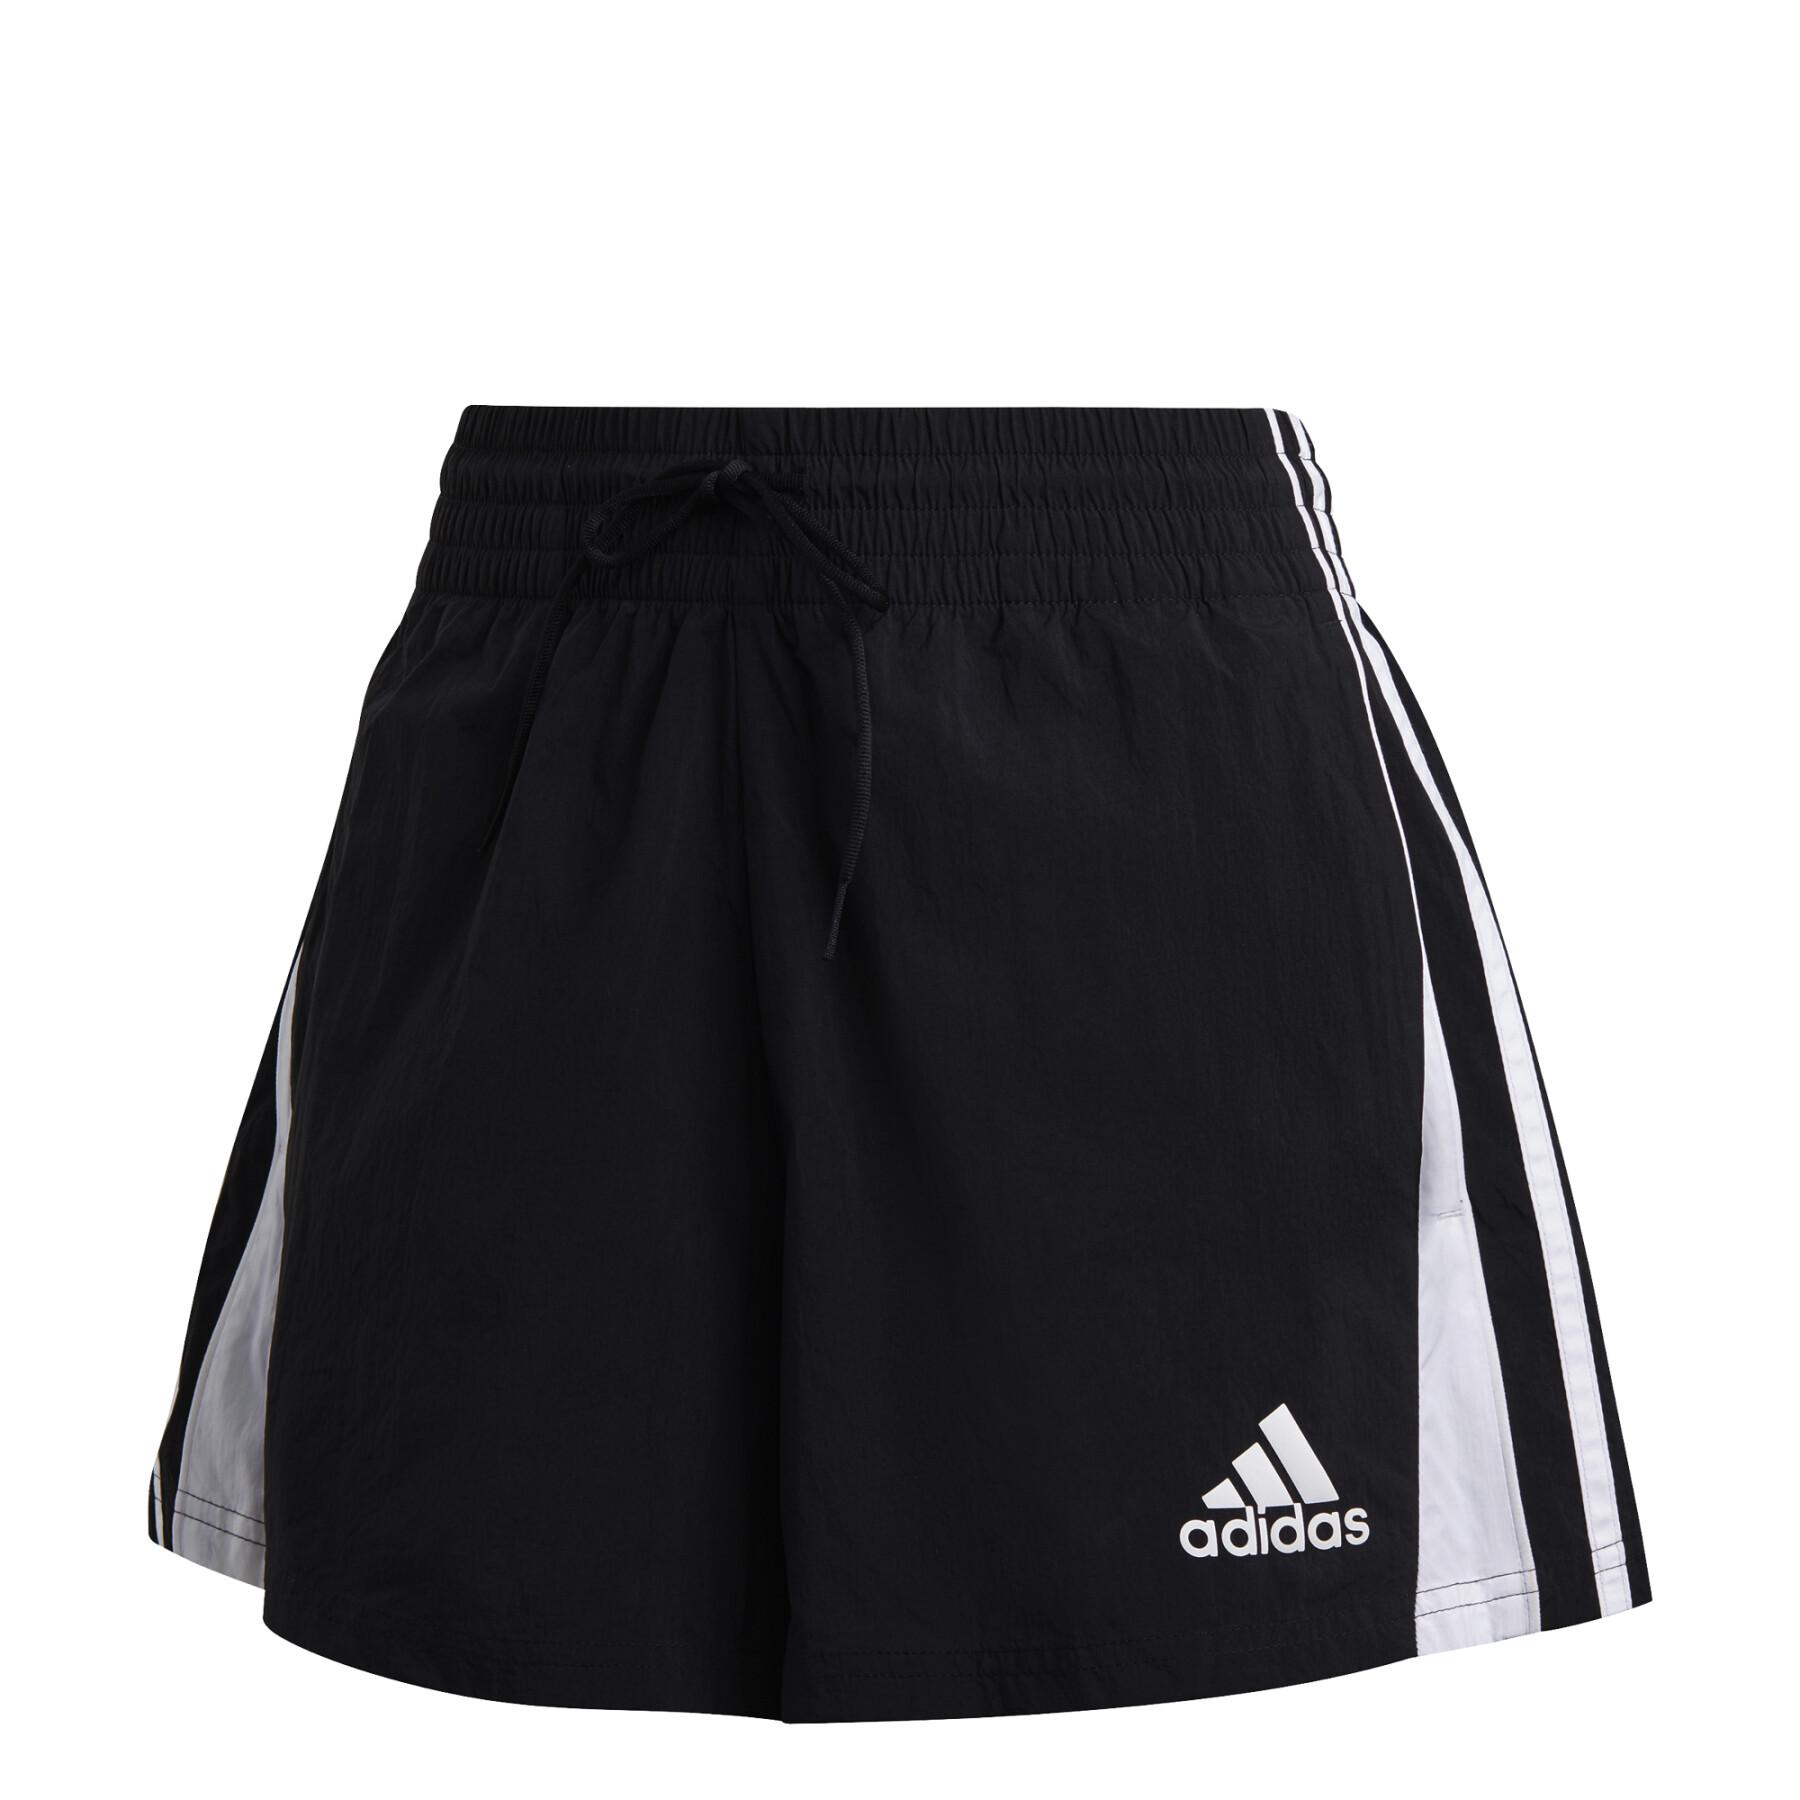 Damen-Shorts adidas Colorblocked 3-Stripes